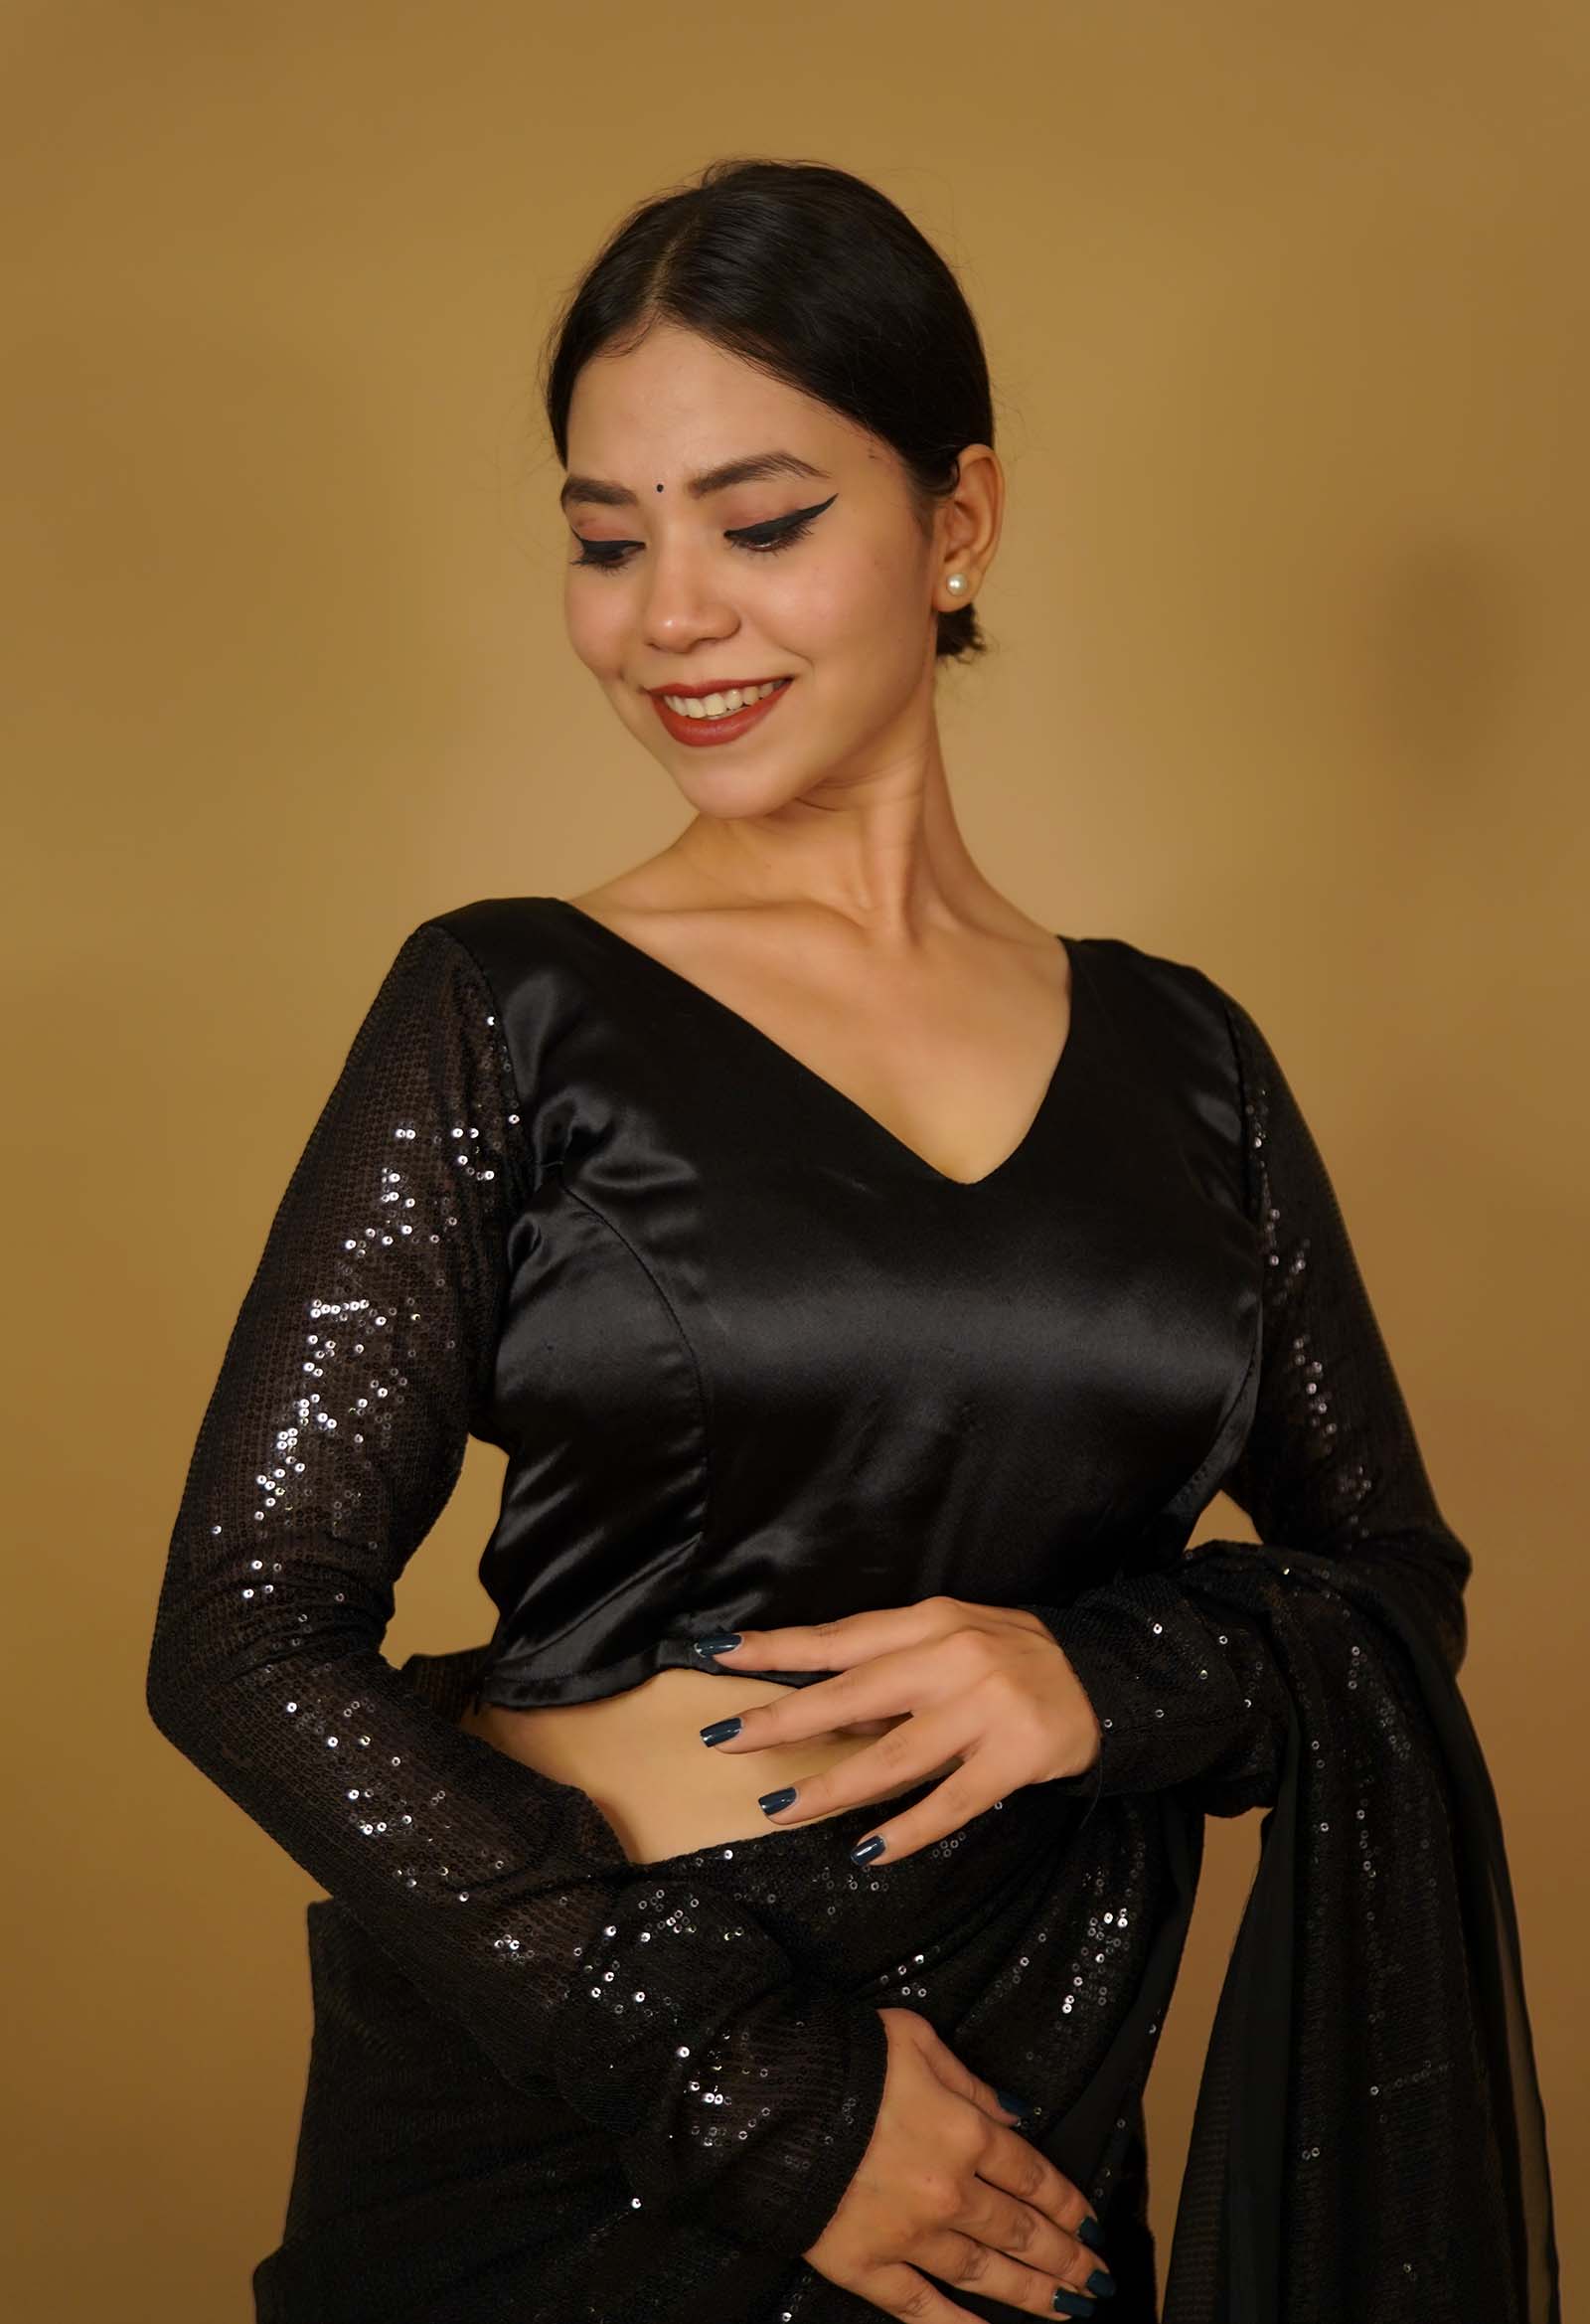 Stylish Black body With V neck & Sequin Full Sleeves Princess cut Designer blouse